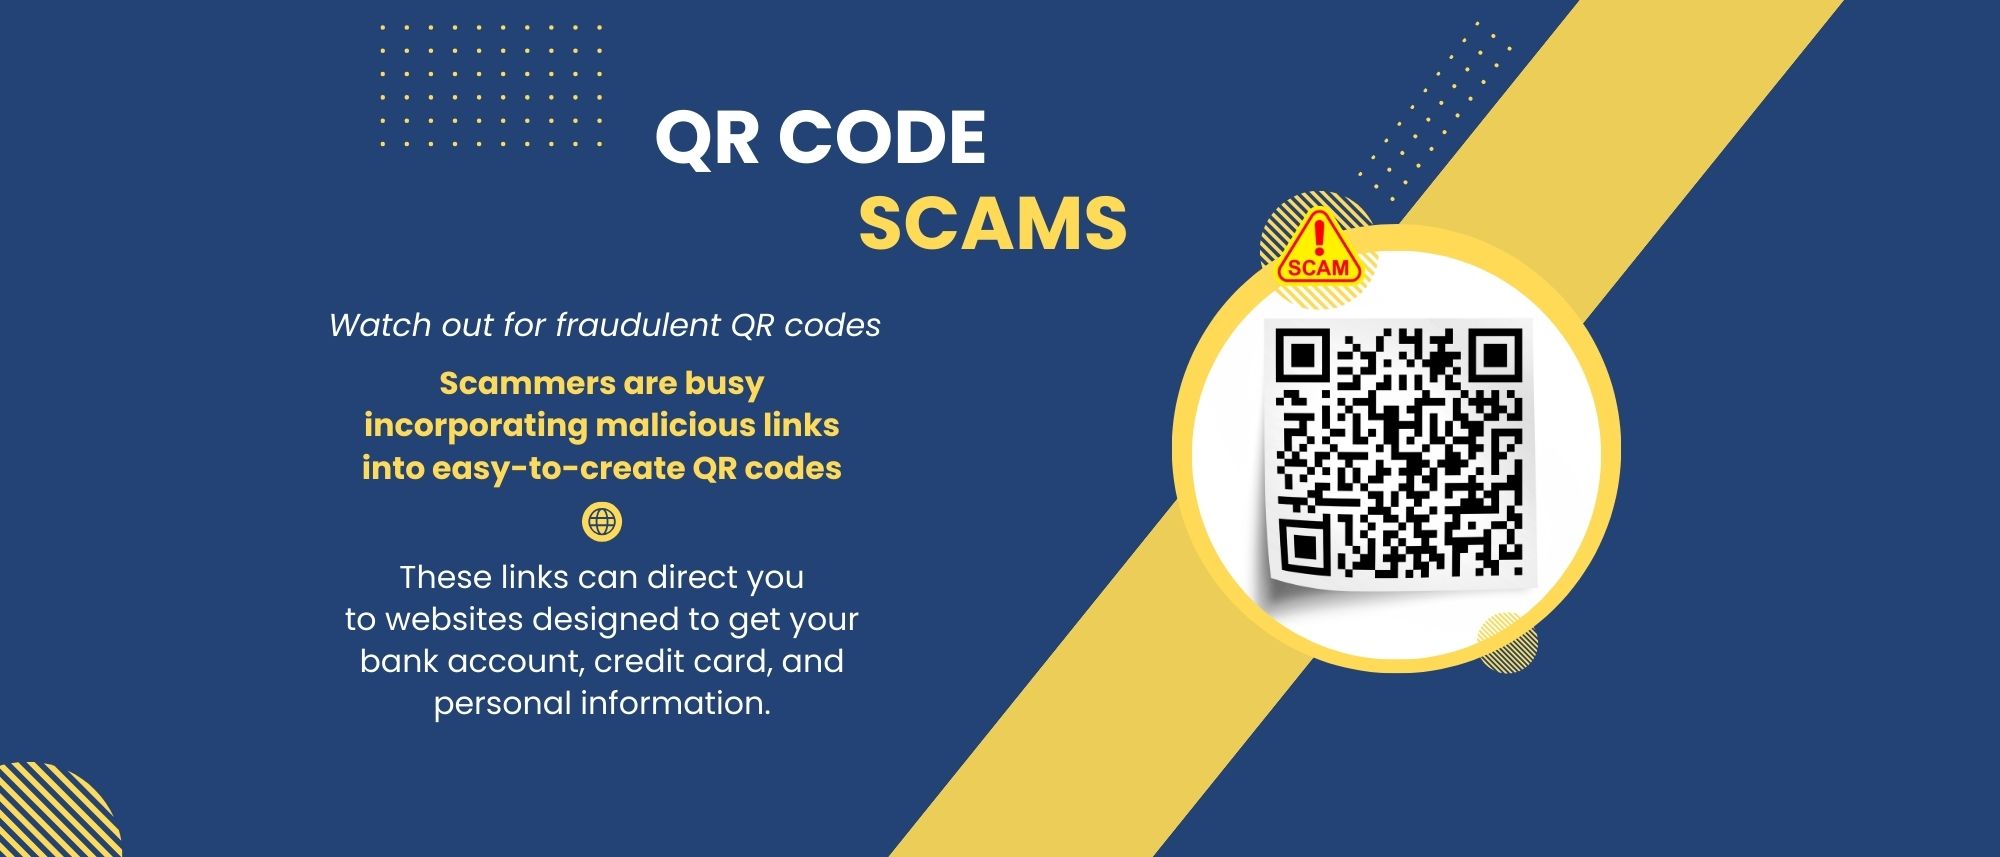 QR Code Scams 